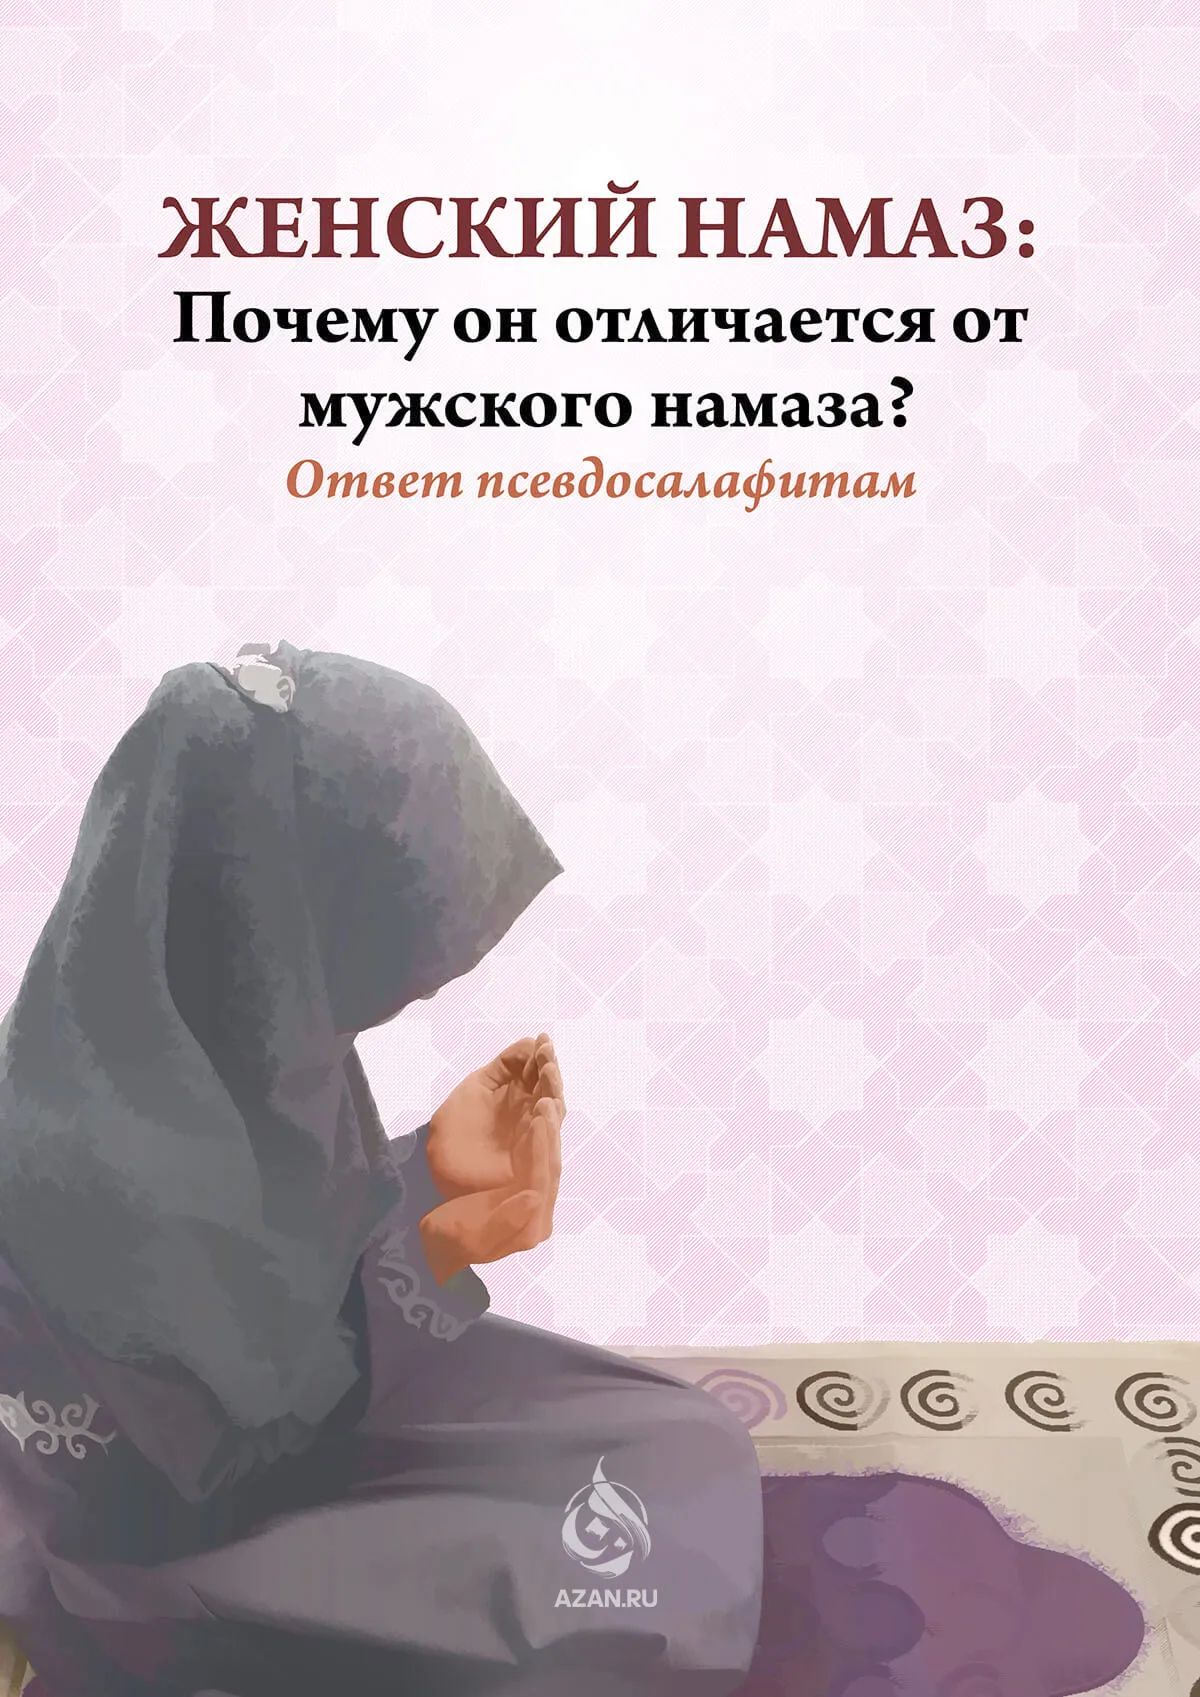 Намаз научиться женщине с нуля на русском. Чтение намаза. Намаз для женщин. Обязательные молитвы для намаза. Намаз текст.